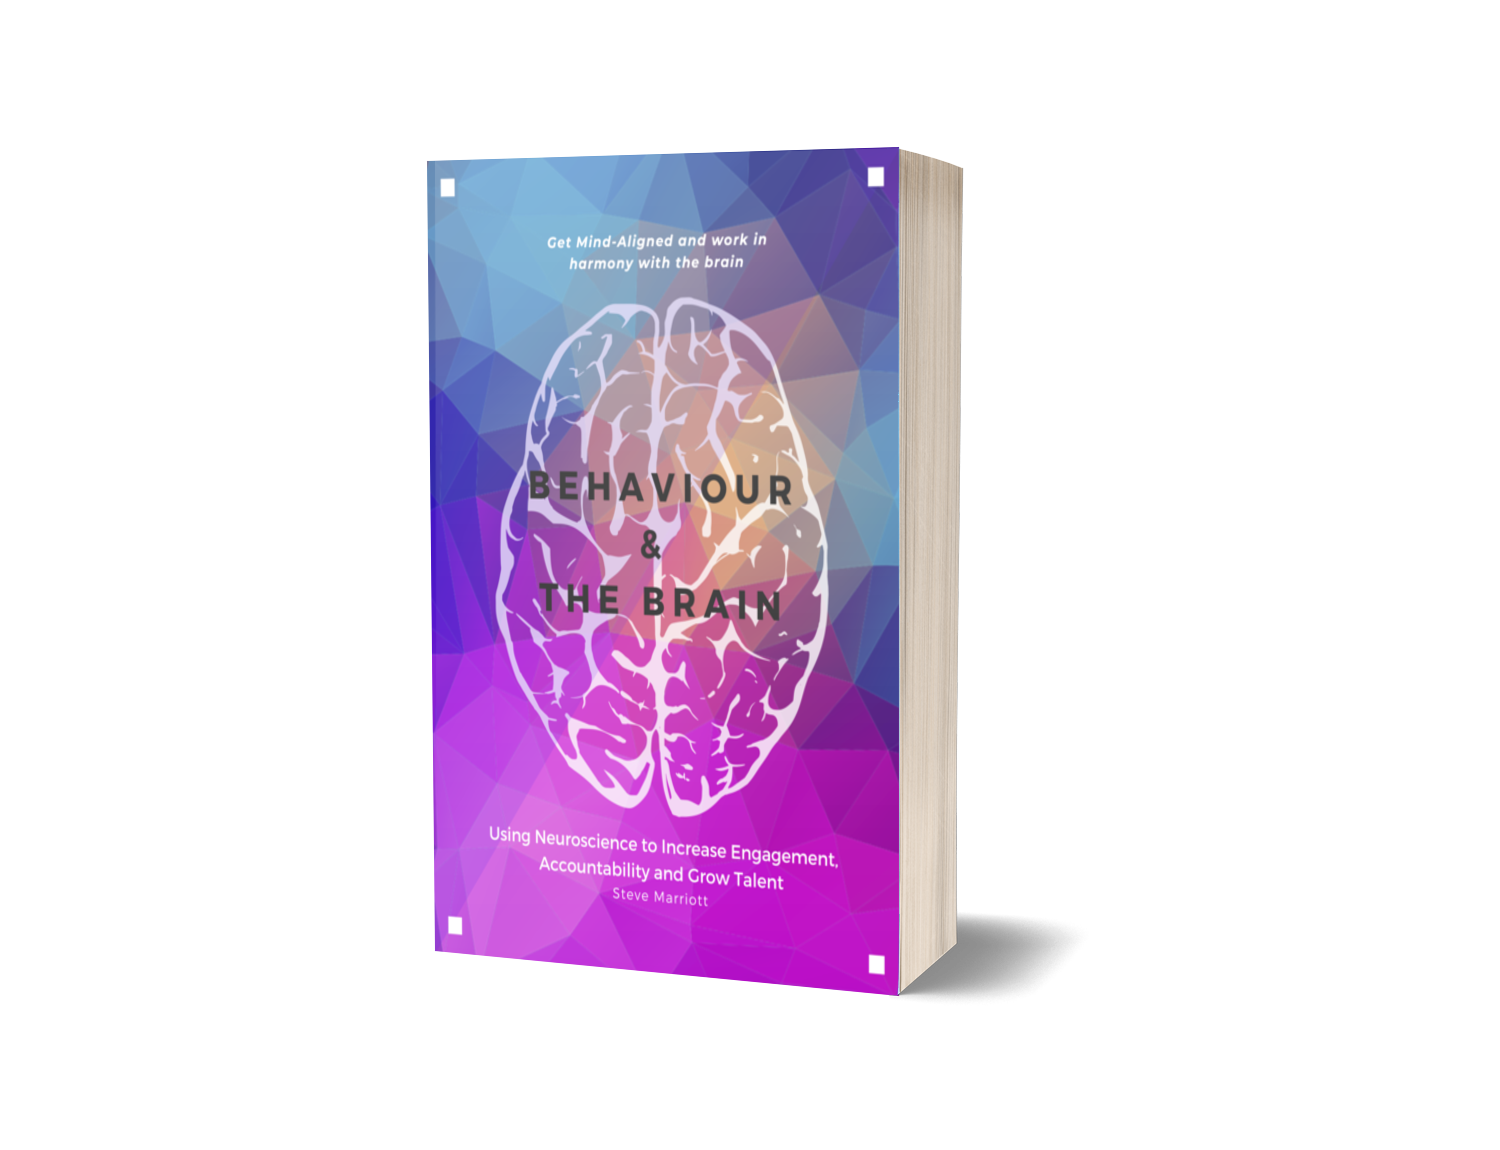 Behaviour and The Brain Book by Steve Marriott